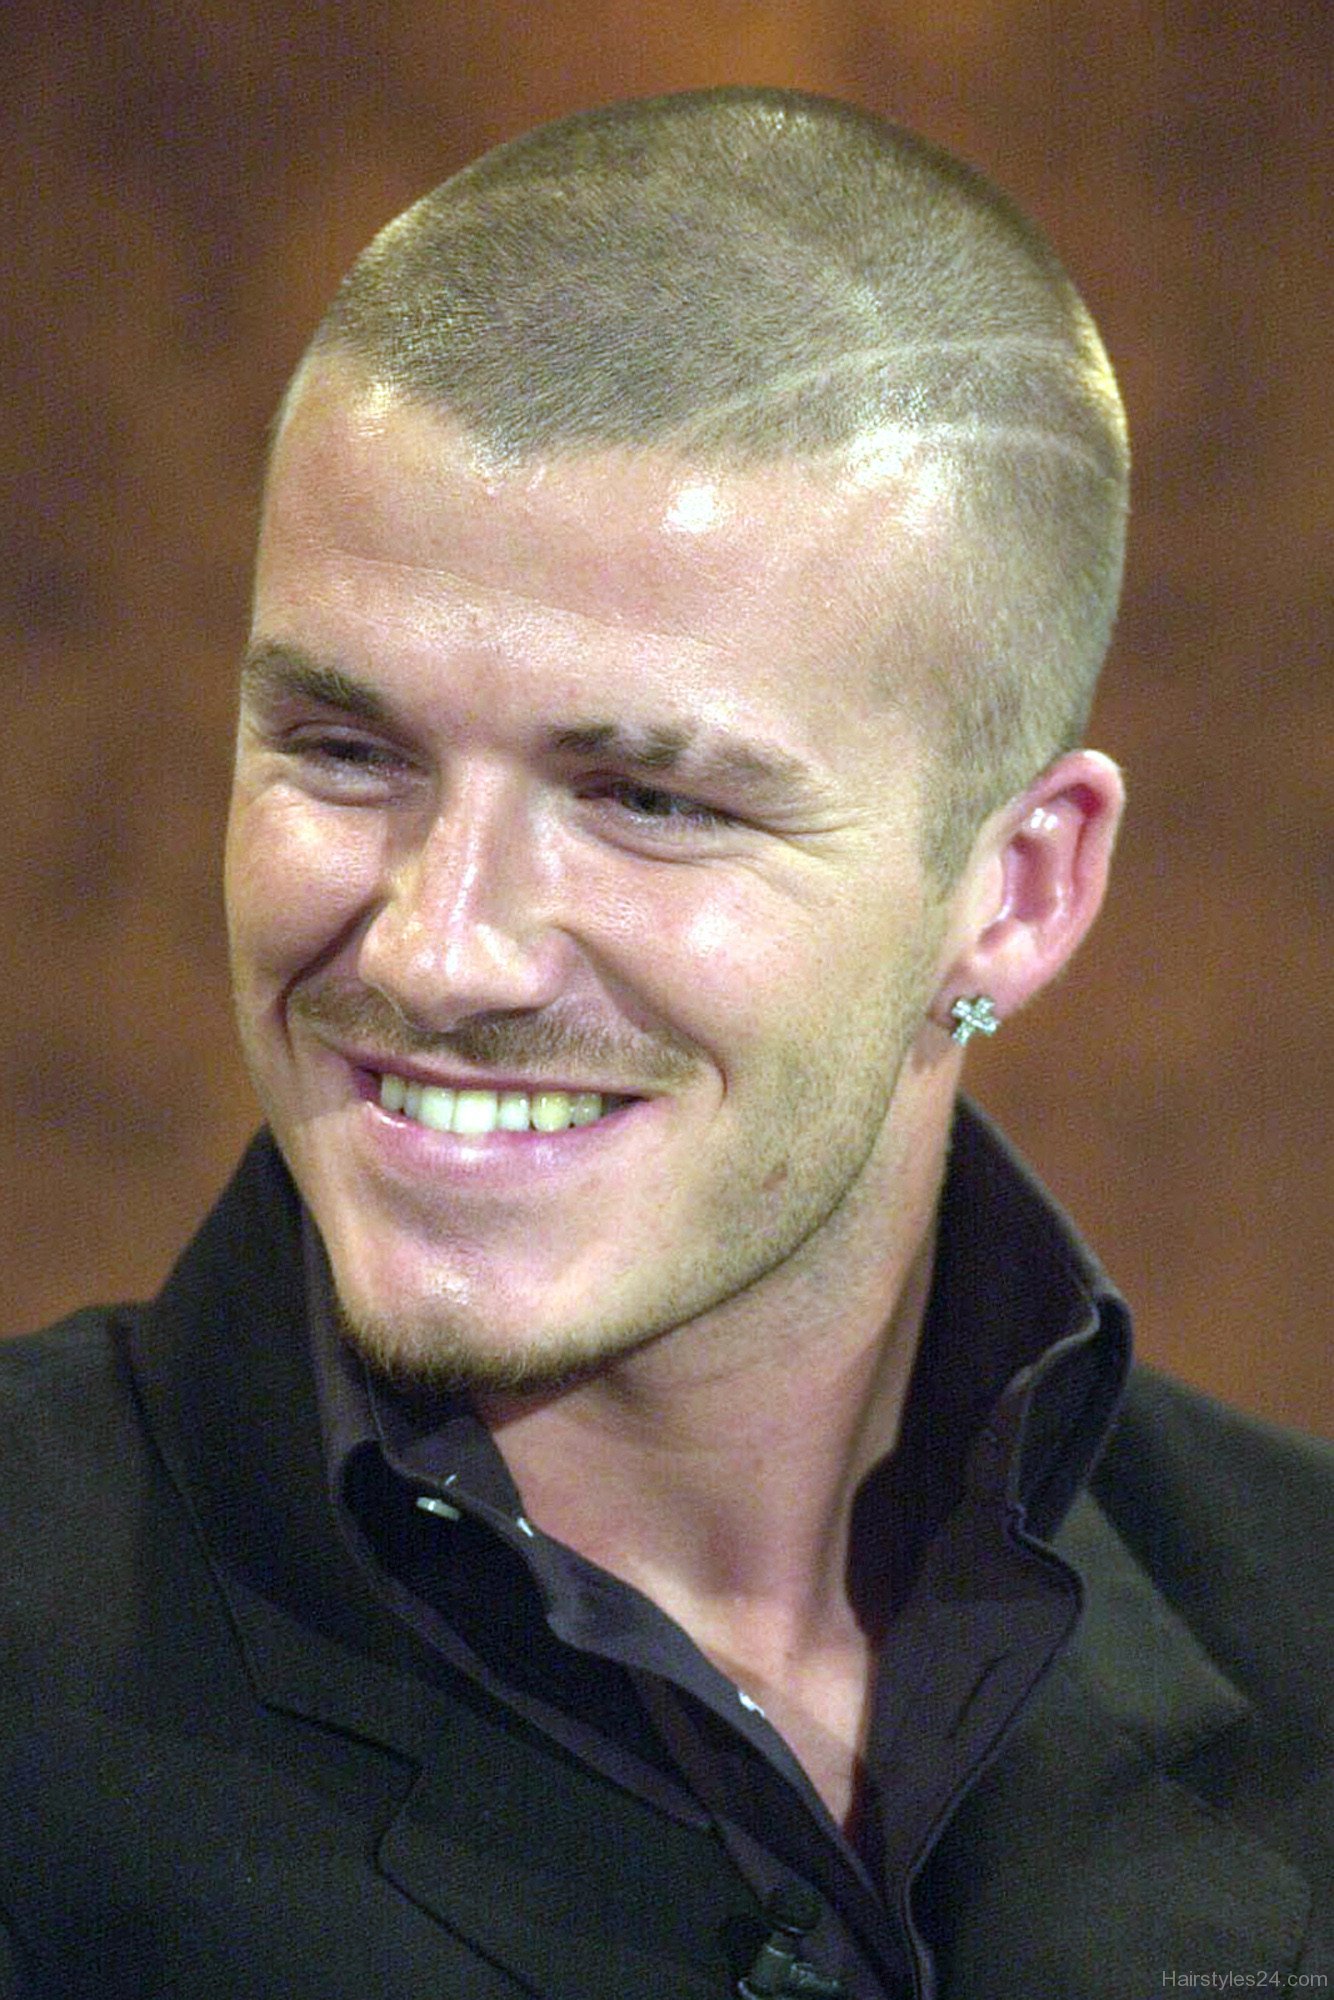 David Beckham Hair Inspiration David Beckham Changing Looks